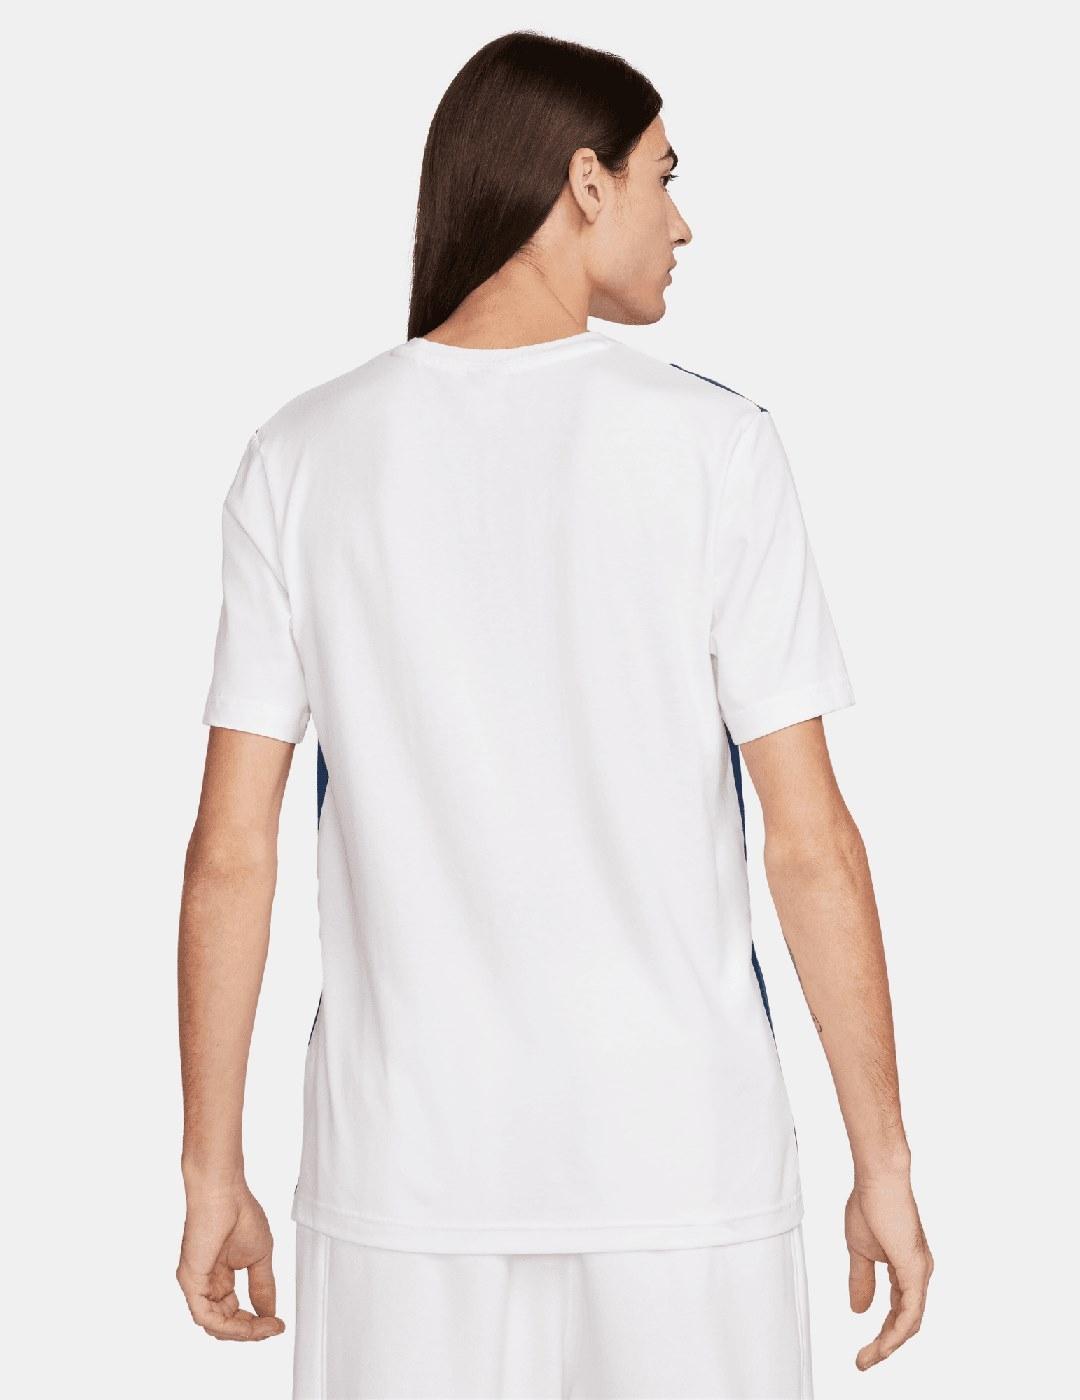 Camiseta Nike Sportswear Air Blanco